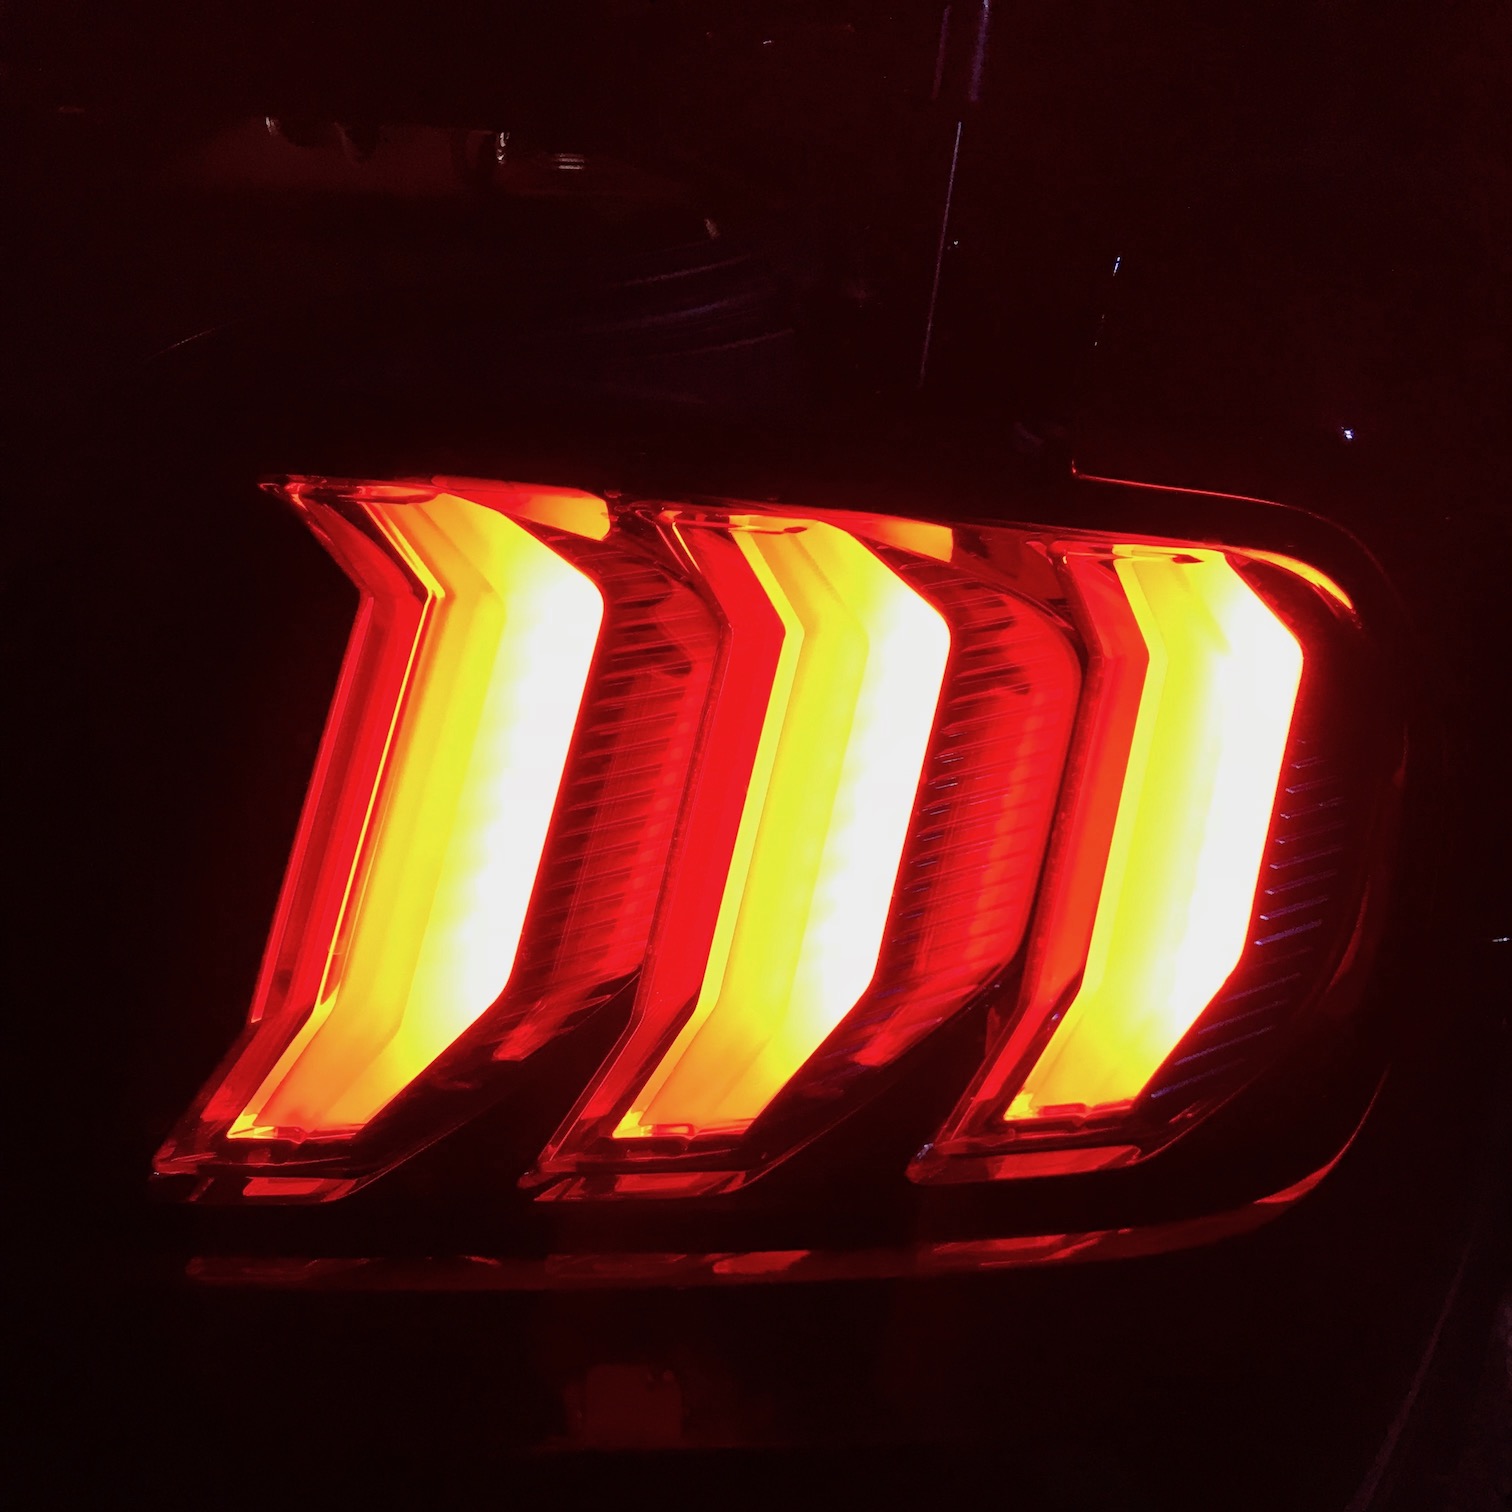 Brake lights on the Mustang.